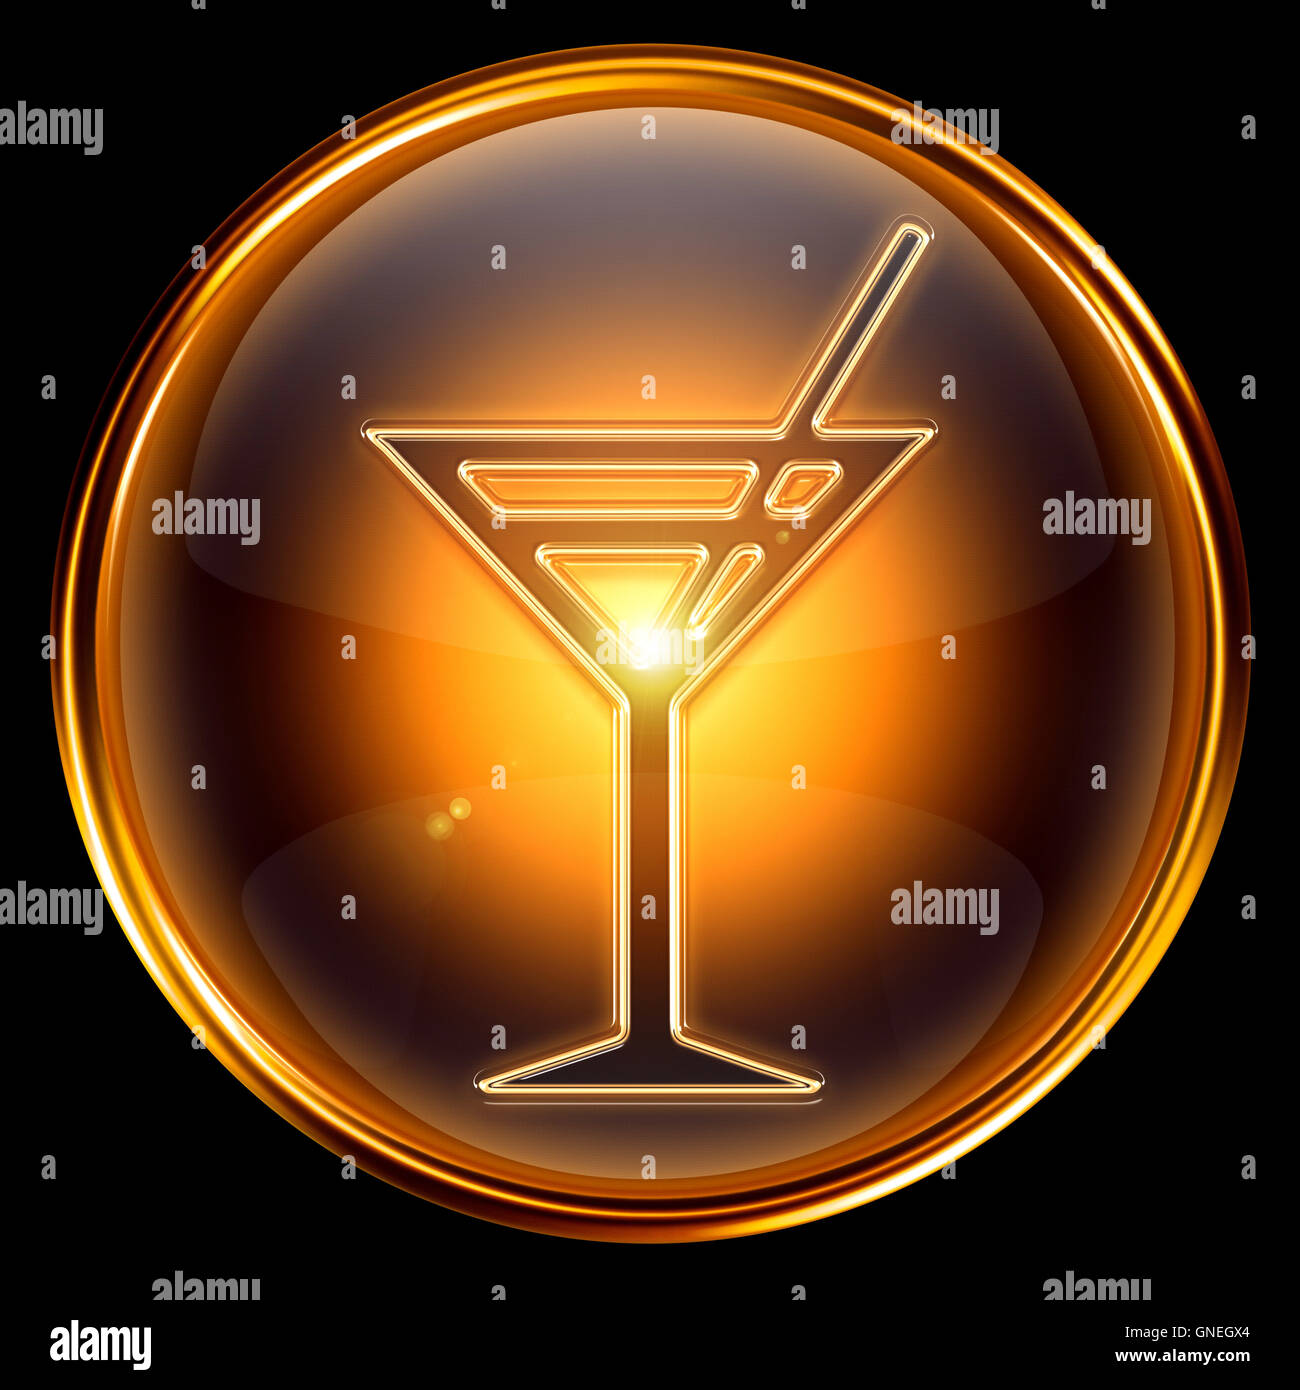 wine-glass icon golden, isolated on black background. Stock Photo